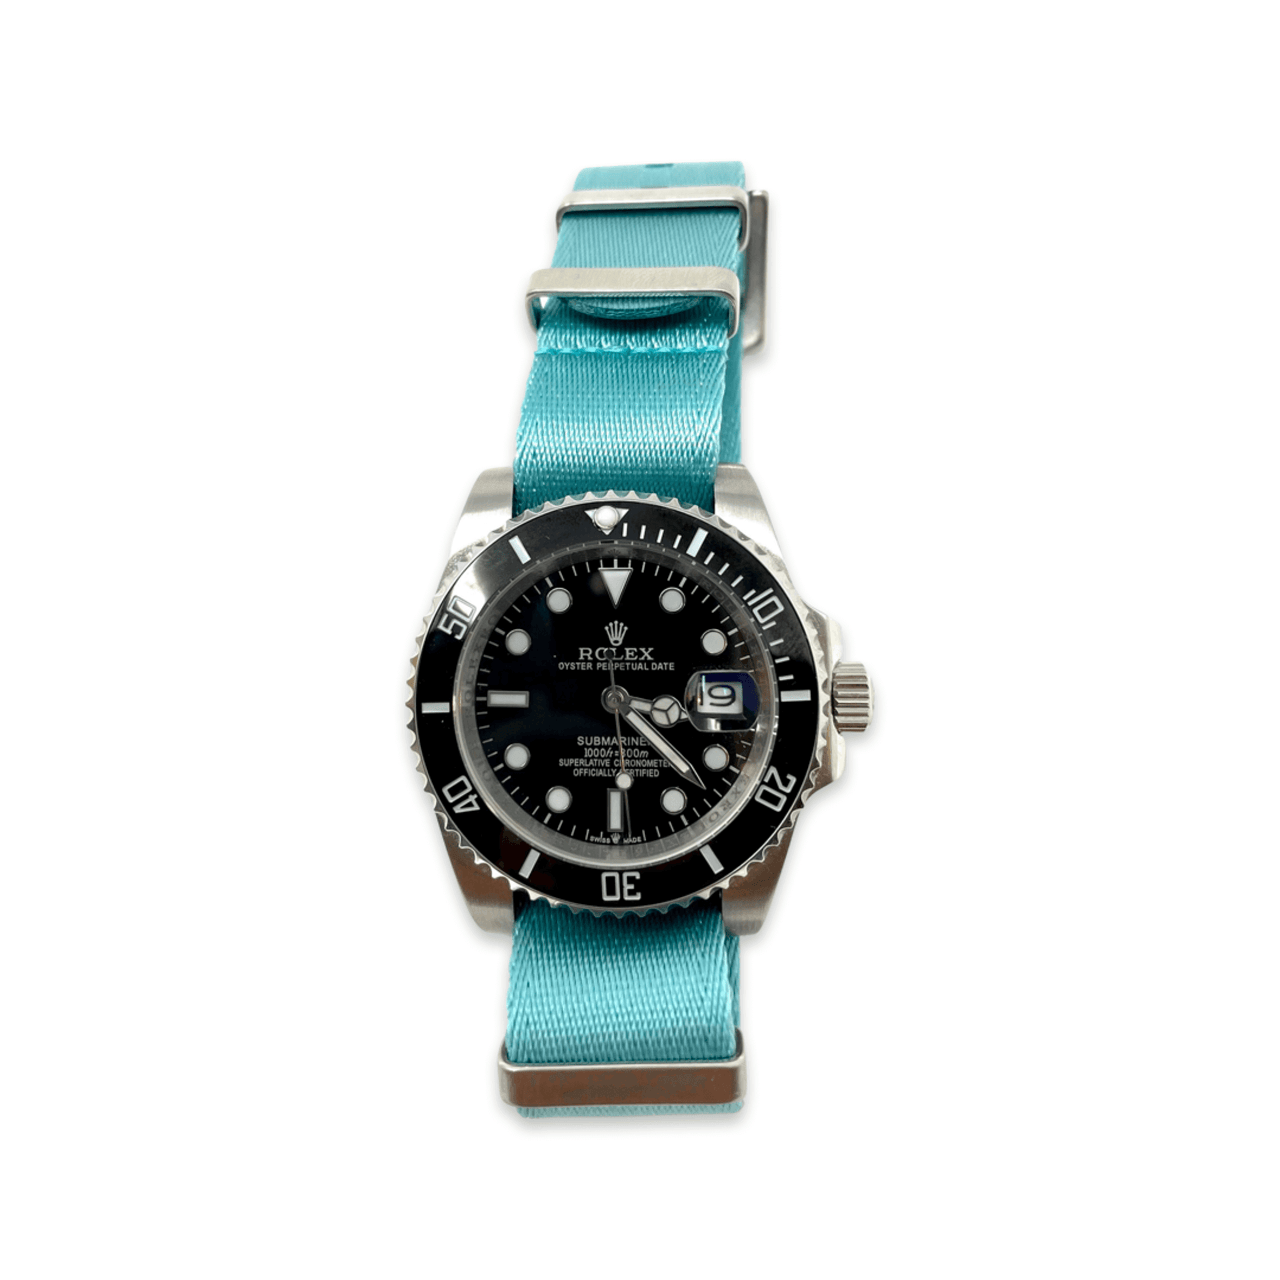 Seatbelt Military Style Watch Strap - Tiffany Blue